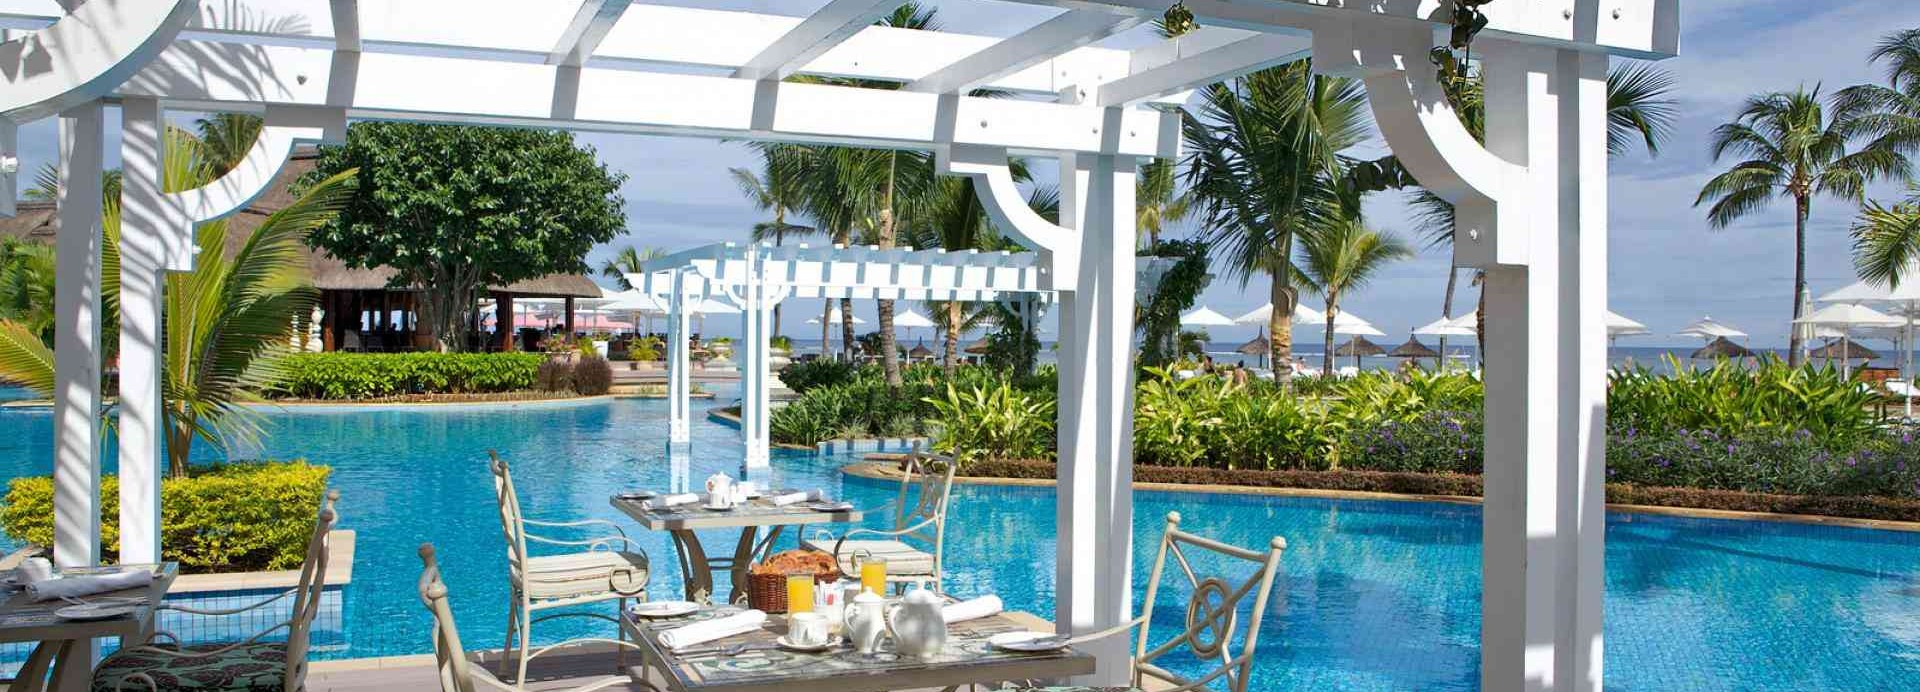 trophy sun resorts mauritius - golf *****